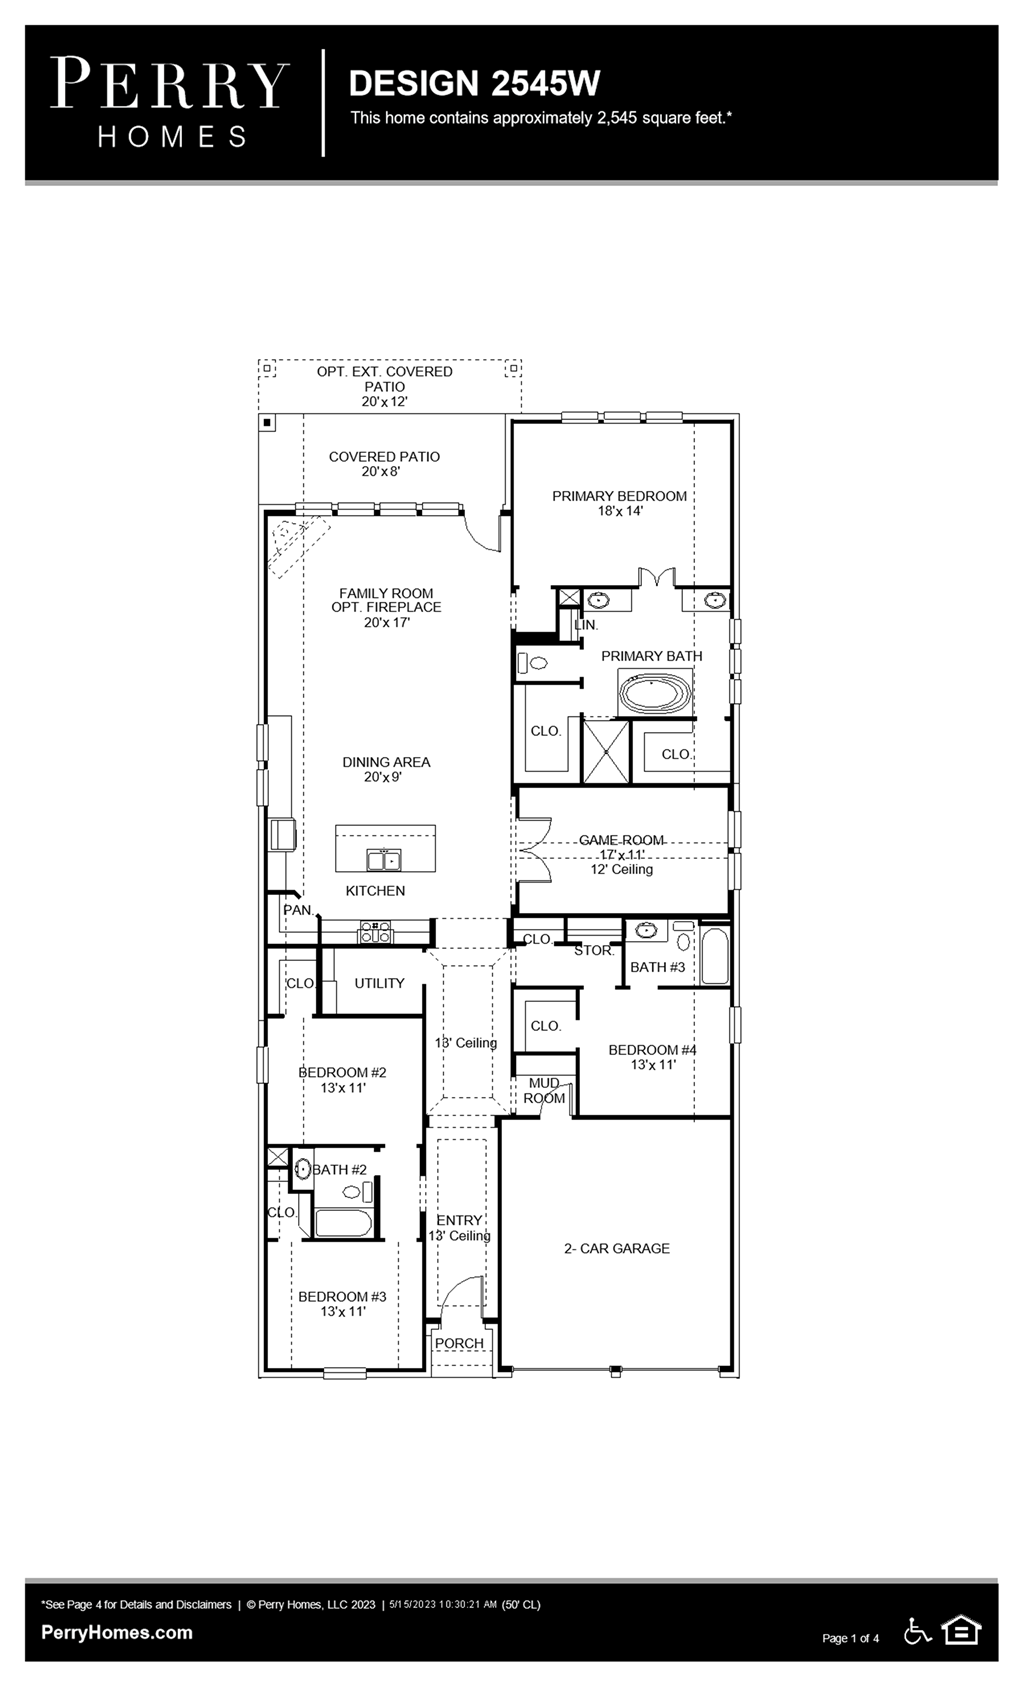 Floor Plan for 2545W